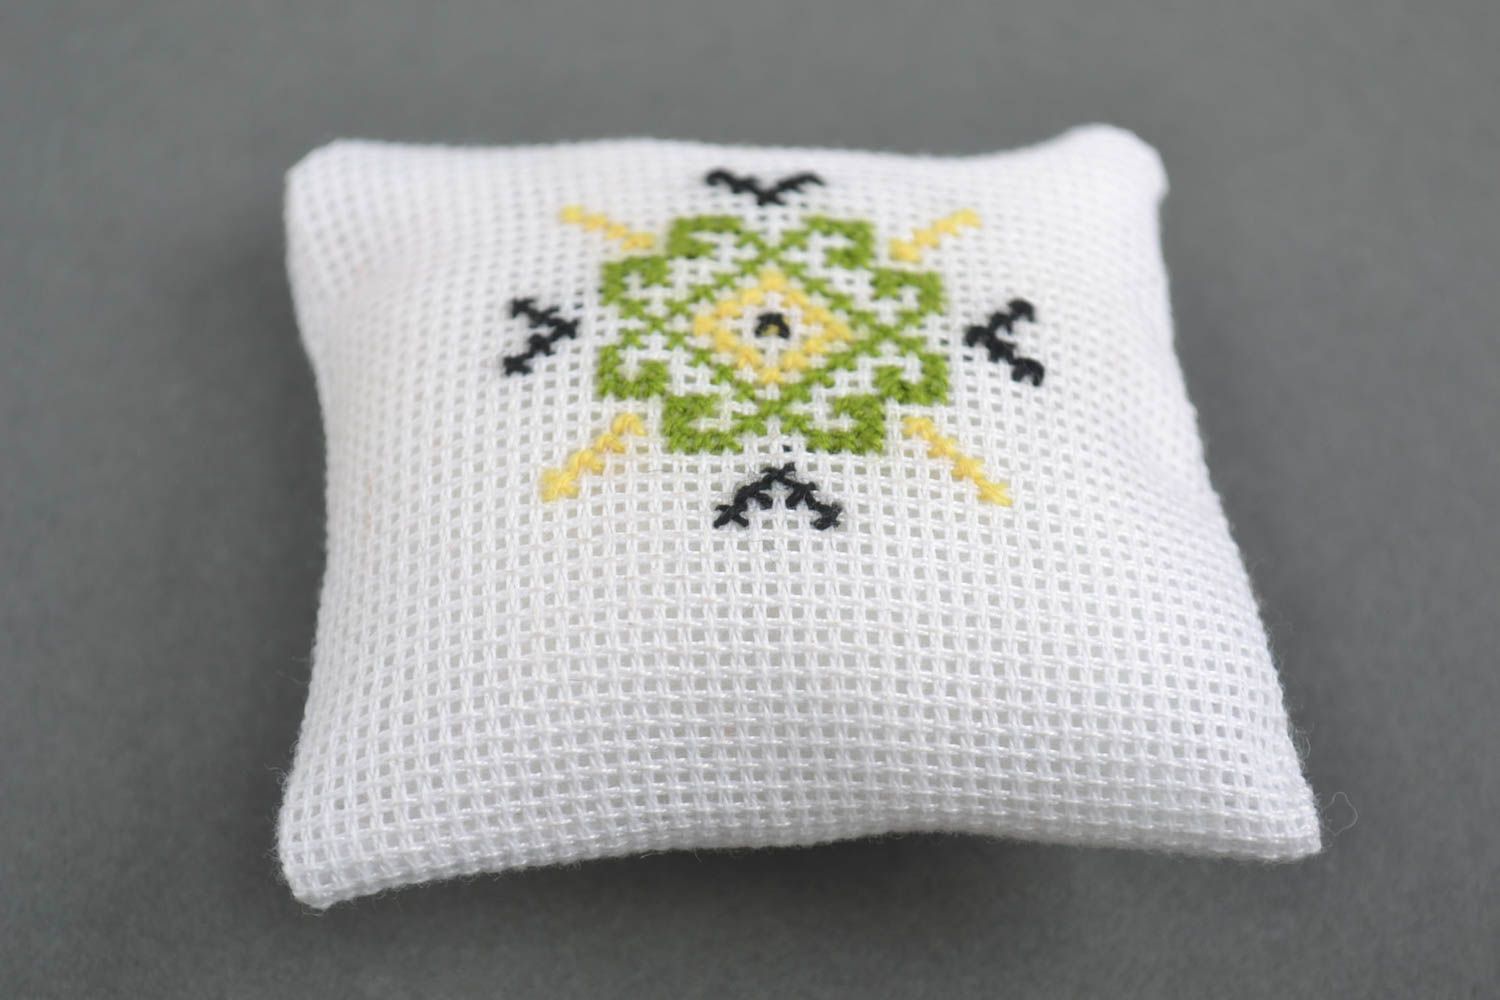 Handmade pin cushion sewing supplies embroidery kits homemade decorations photo 5